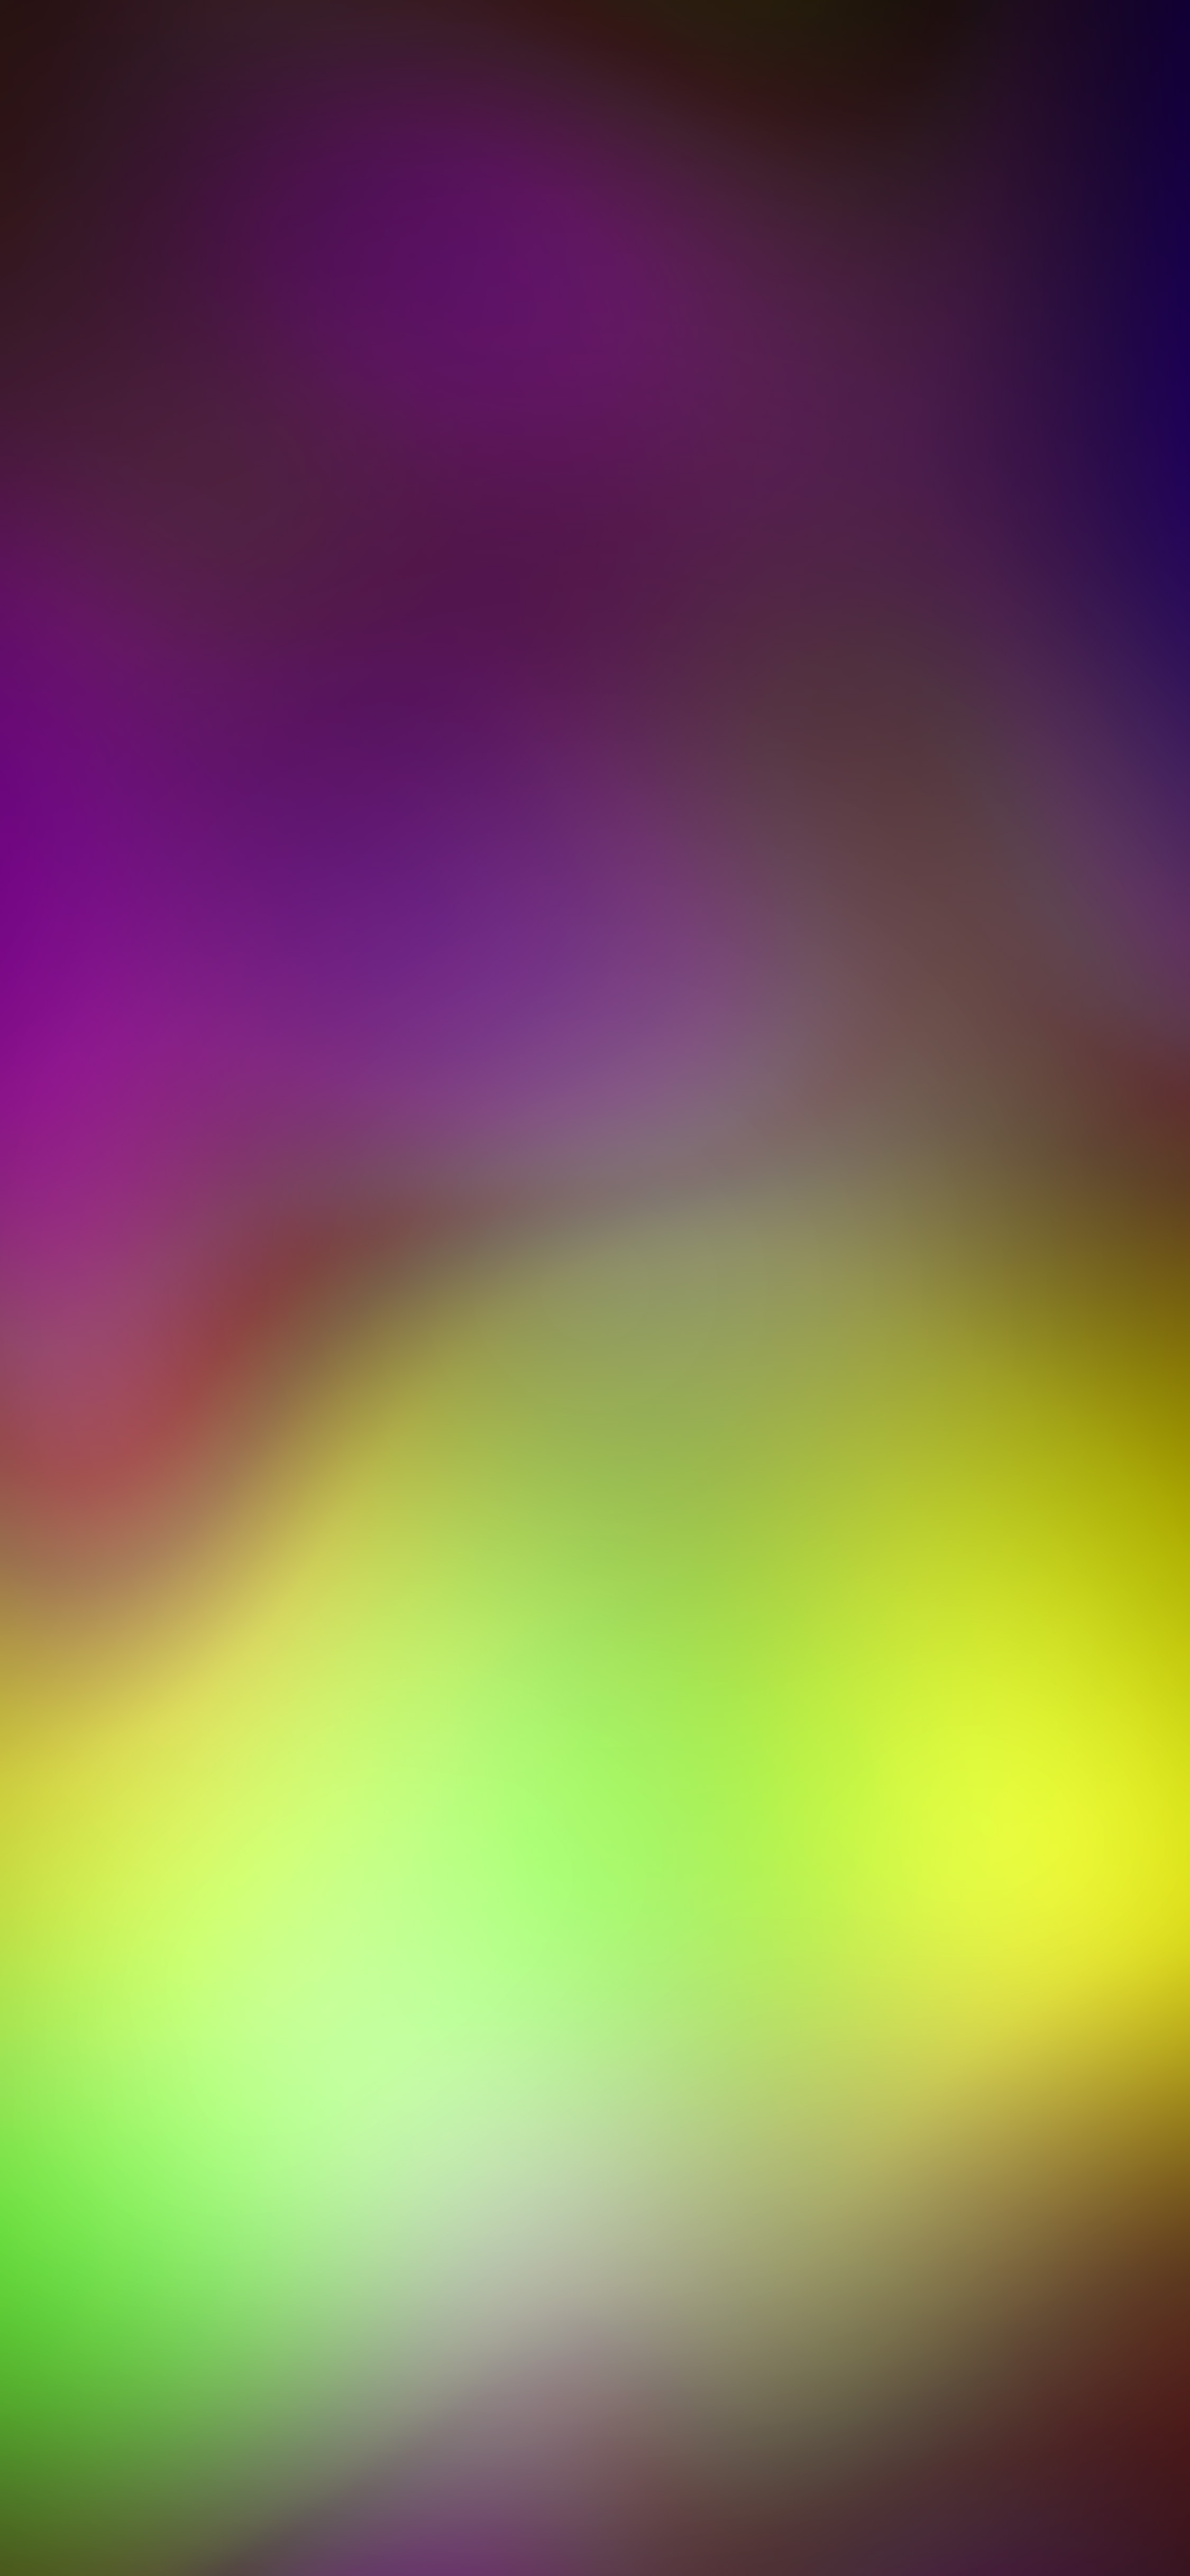 Ipod IPhone IPad IOS Colorful Vertical Portrait Display 2250x4872